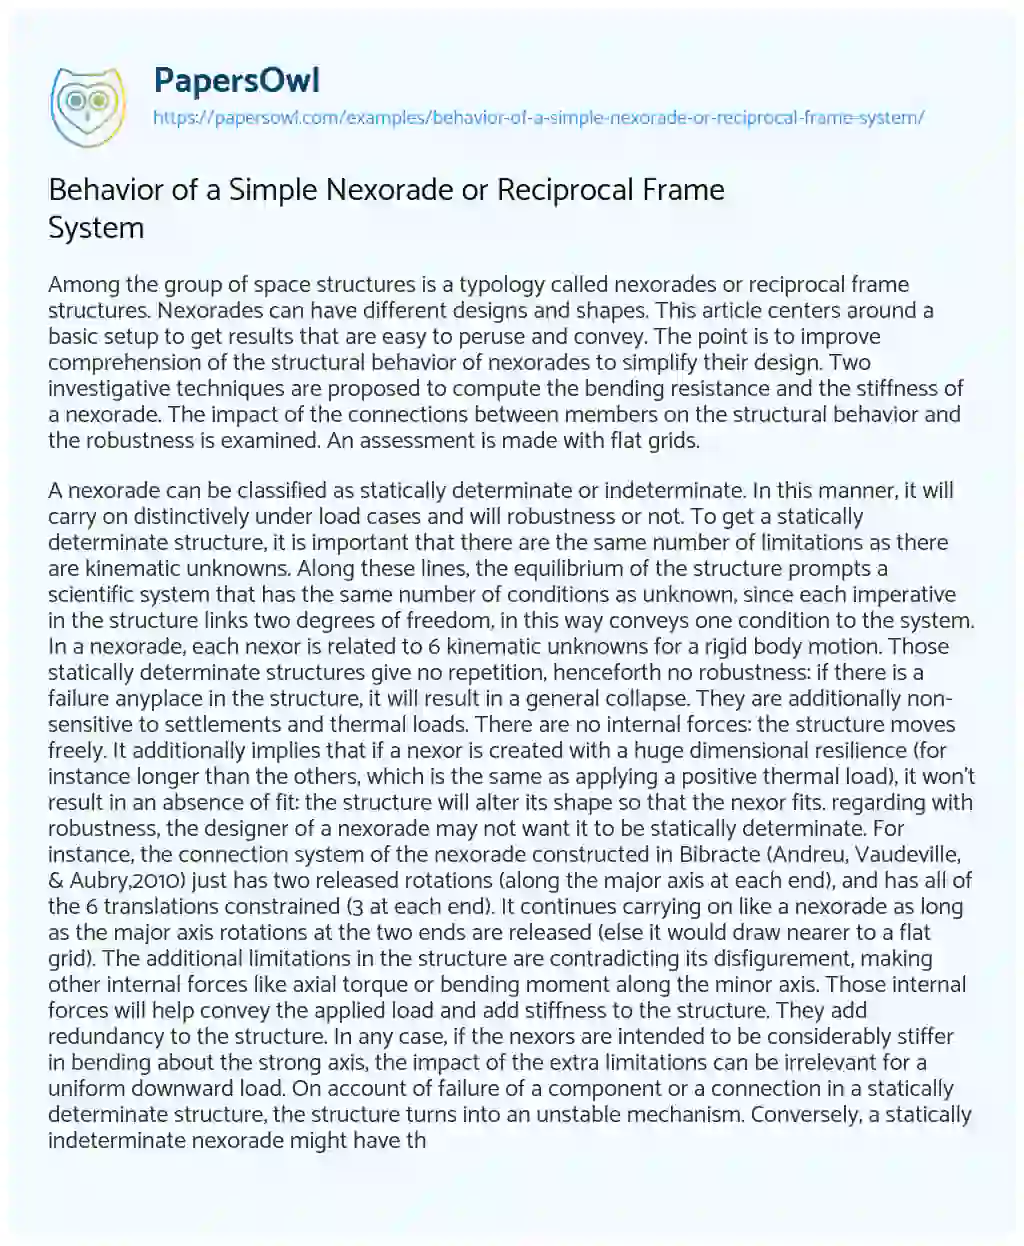 Essay on Behavior of a Simple Nexorade or Reciprocal Frame System